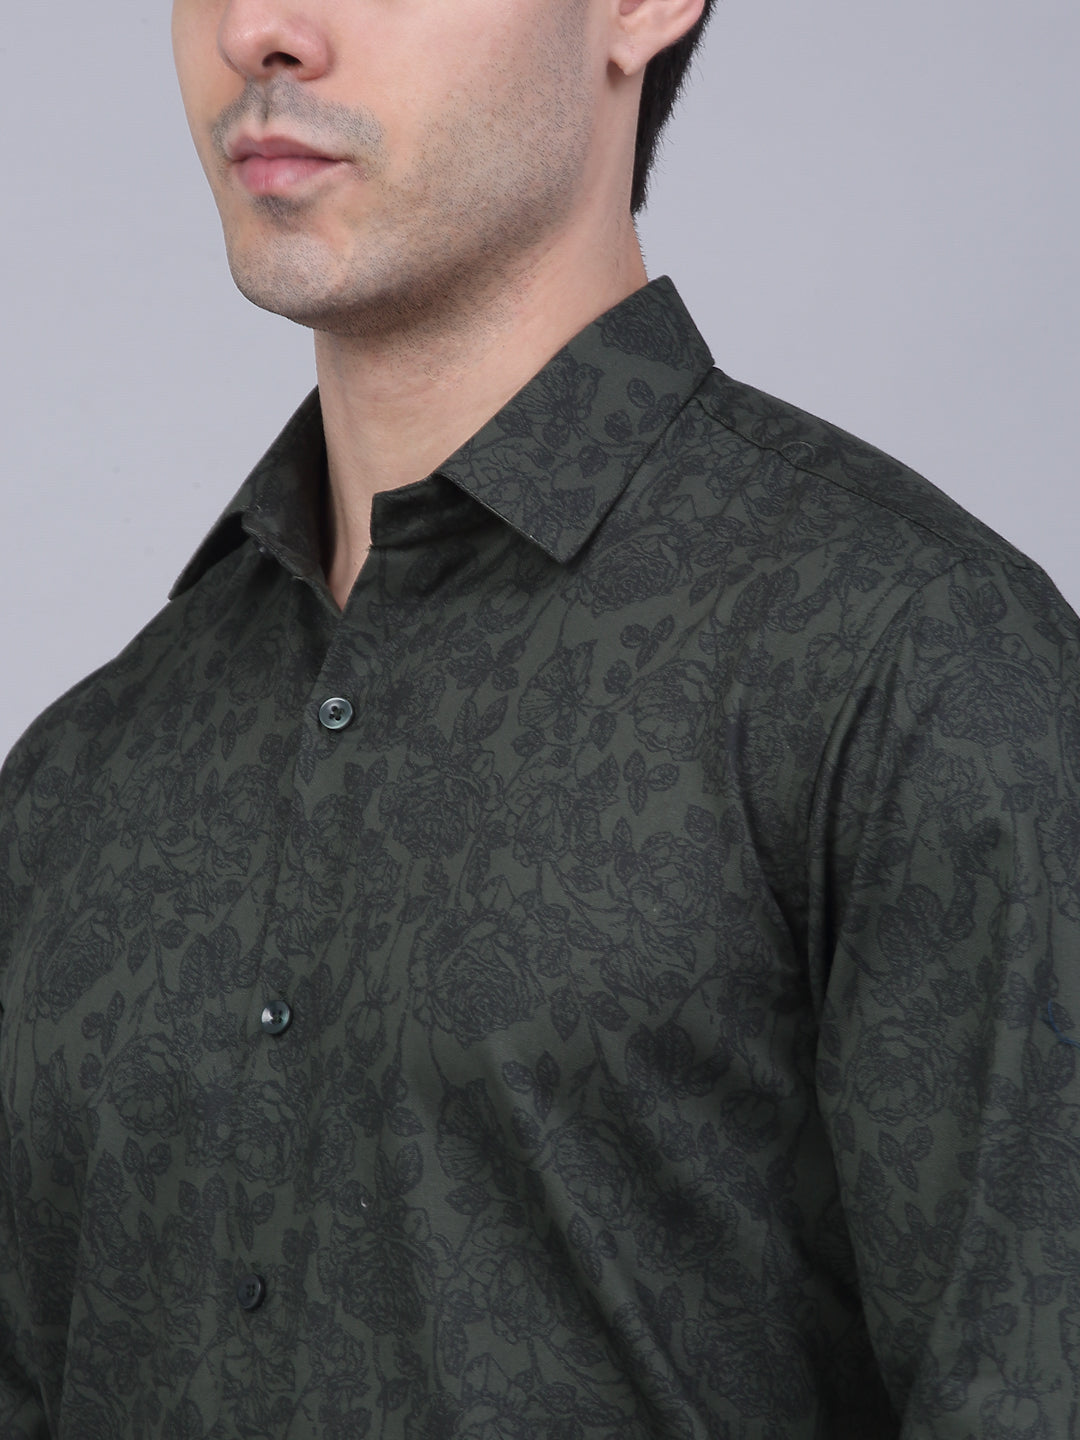 Jainish Men's Cotton Lycra Printed Formal Shirts ( SF 845Olive )